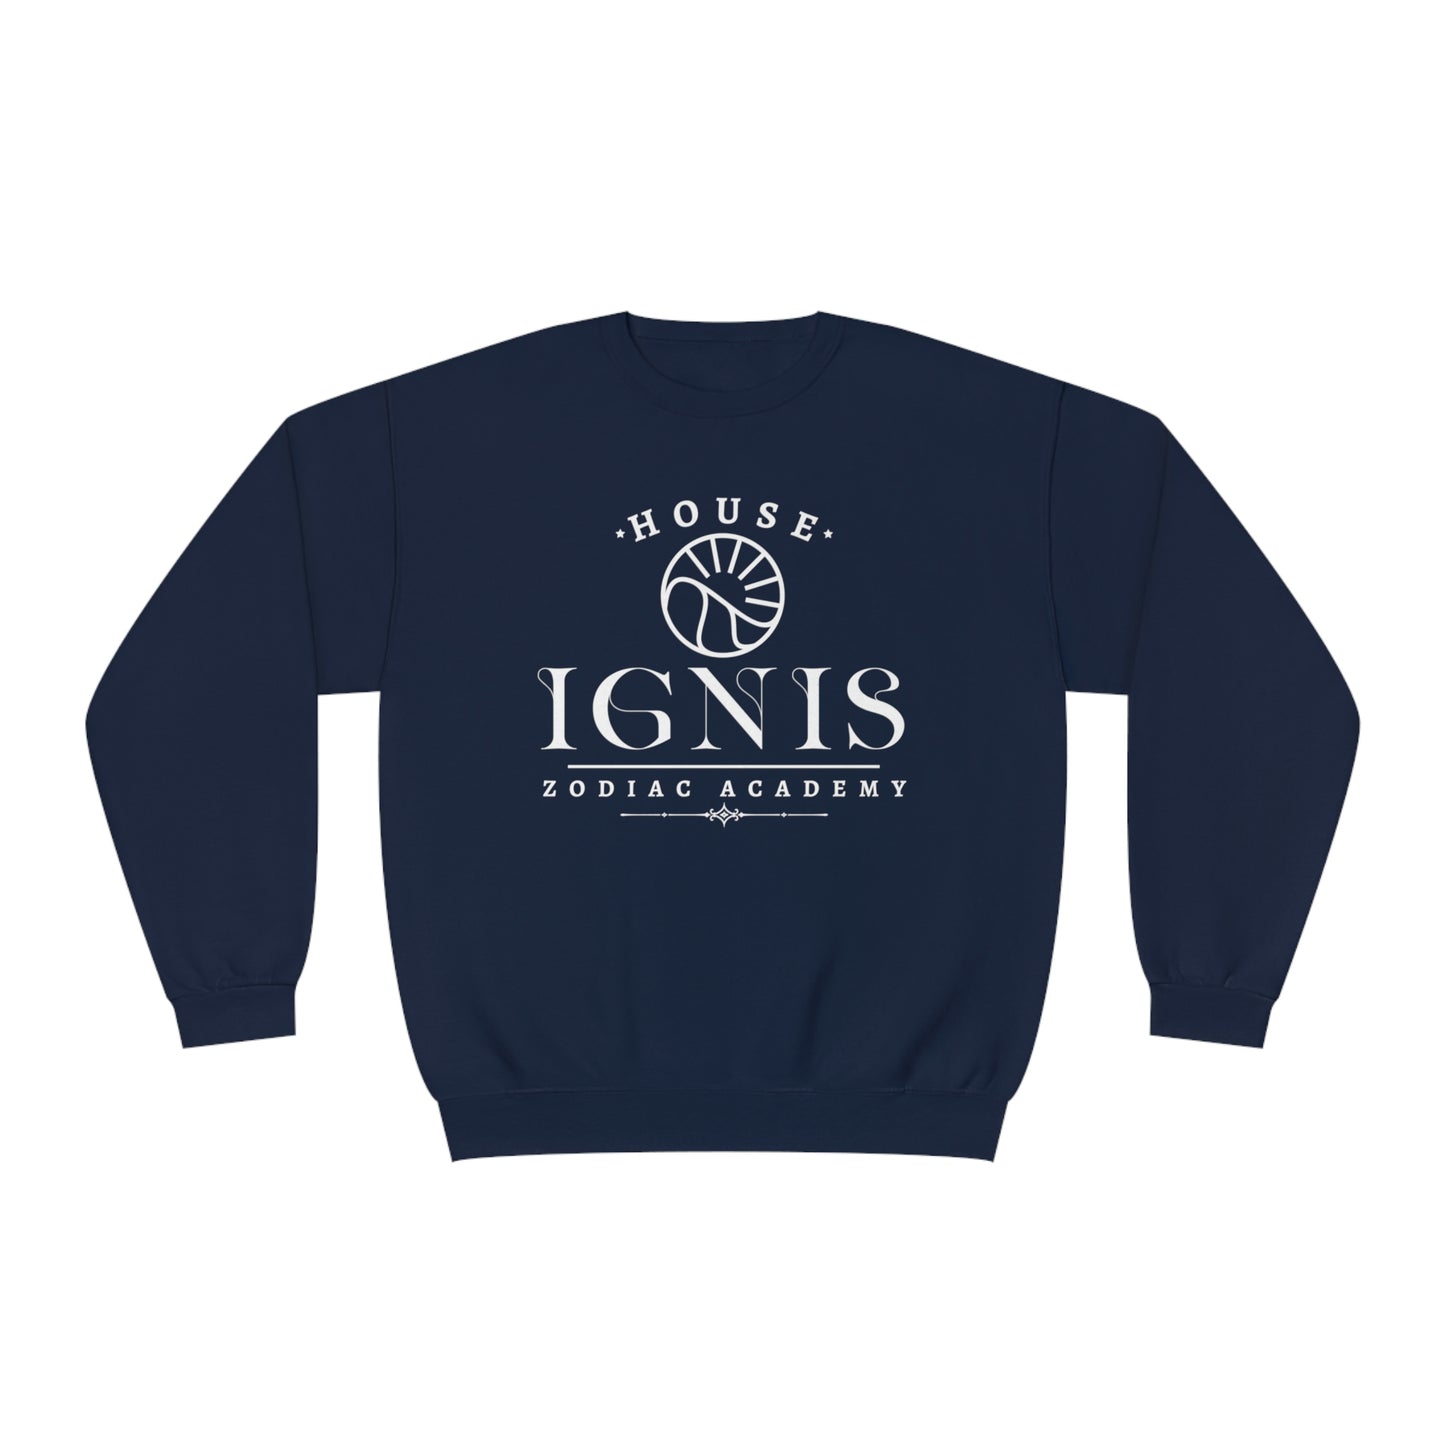 House Ignis Zodiac Academy Crewneck Sweatshirt